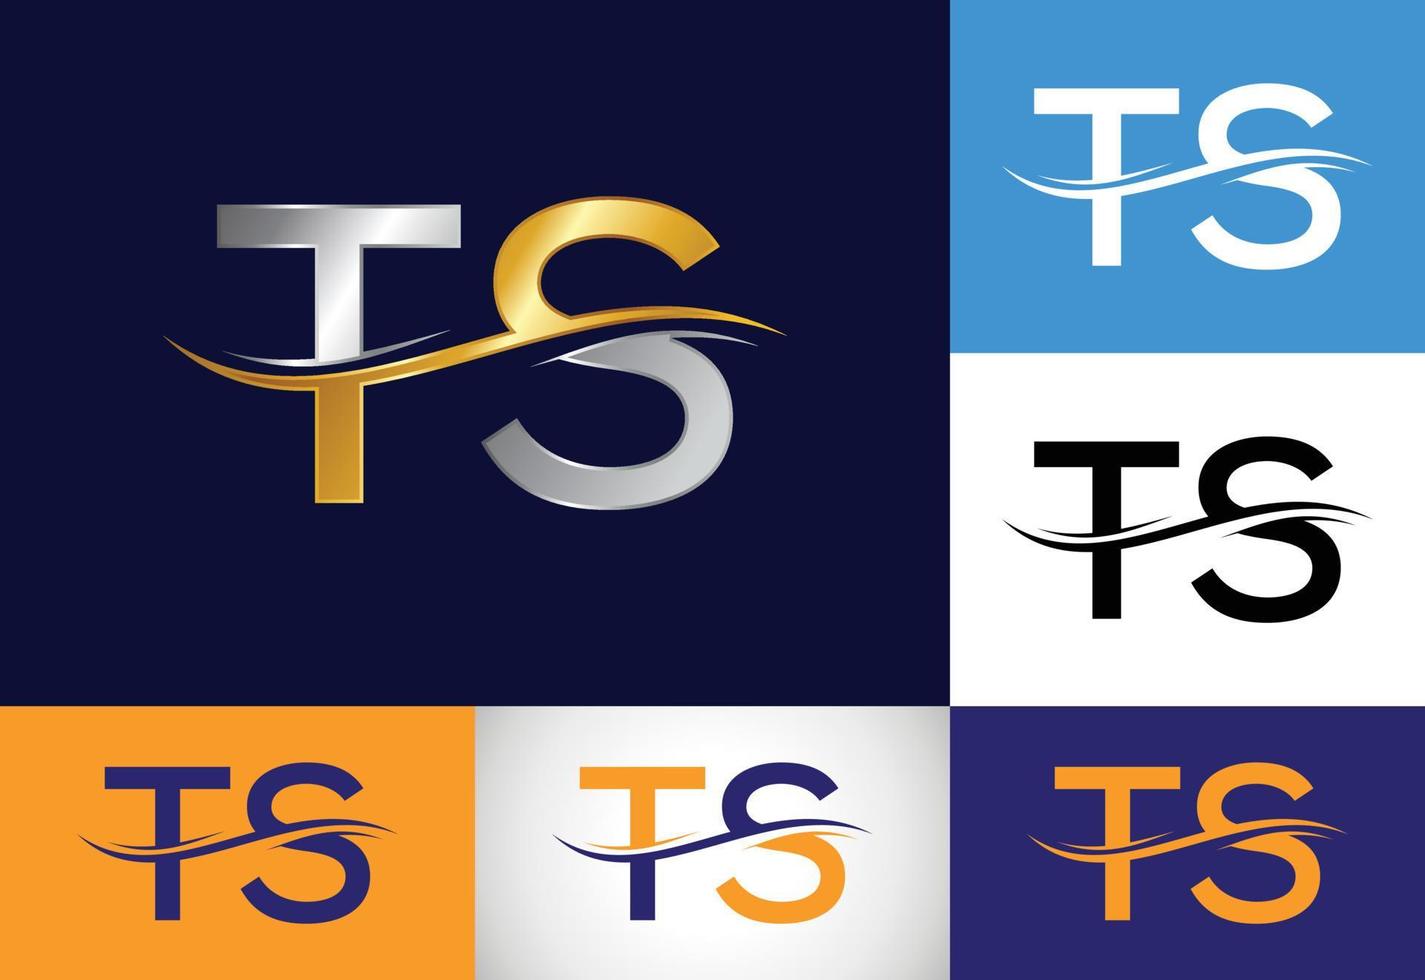 letra inicial ts vetor de design de logotipo. símbolo gráfico do alfabeto para identidade de negócios corporativos